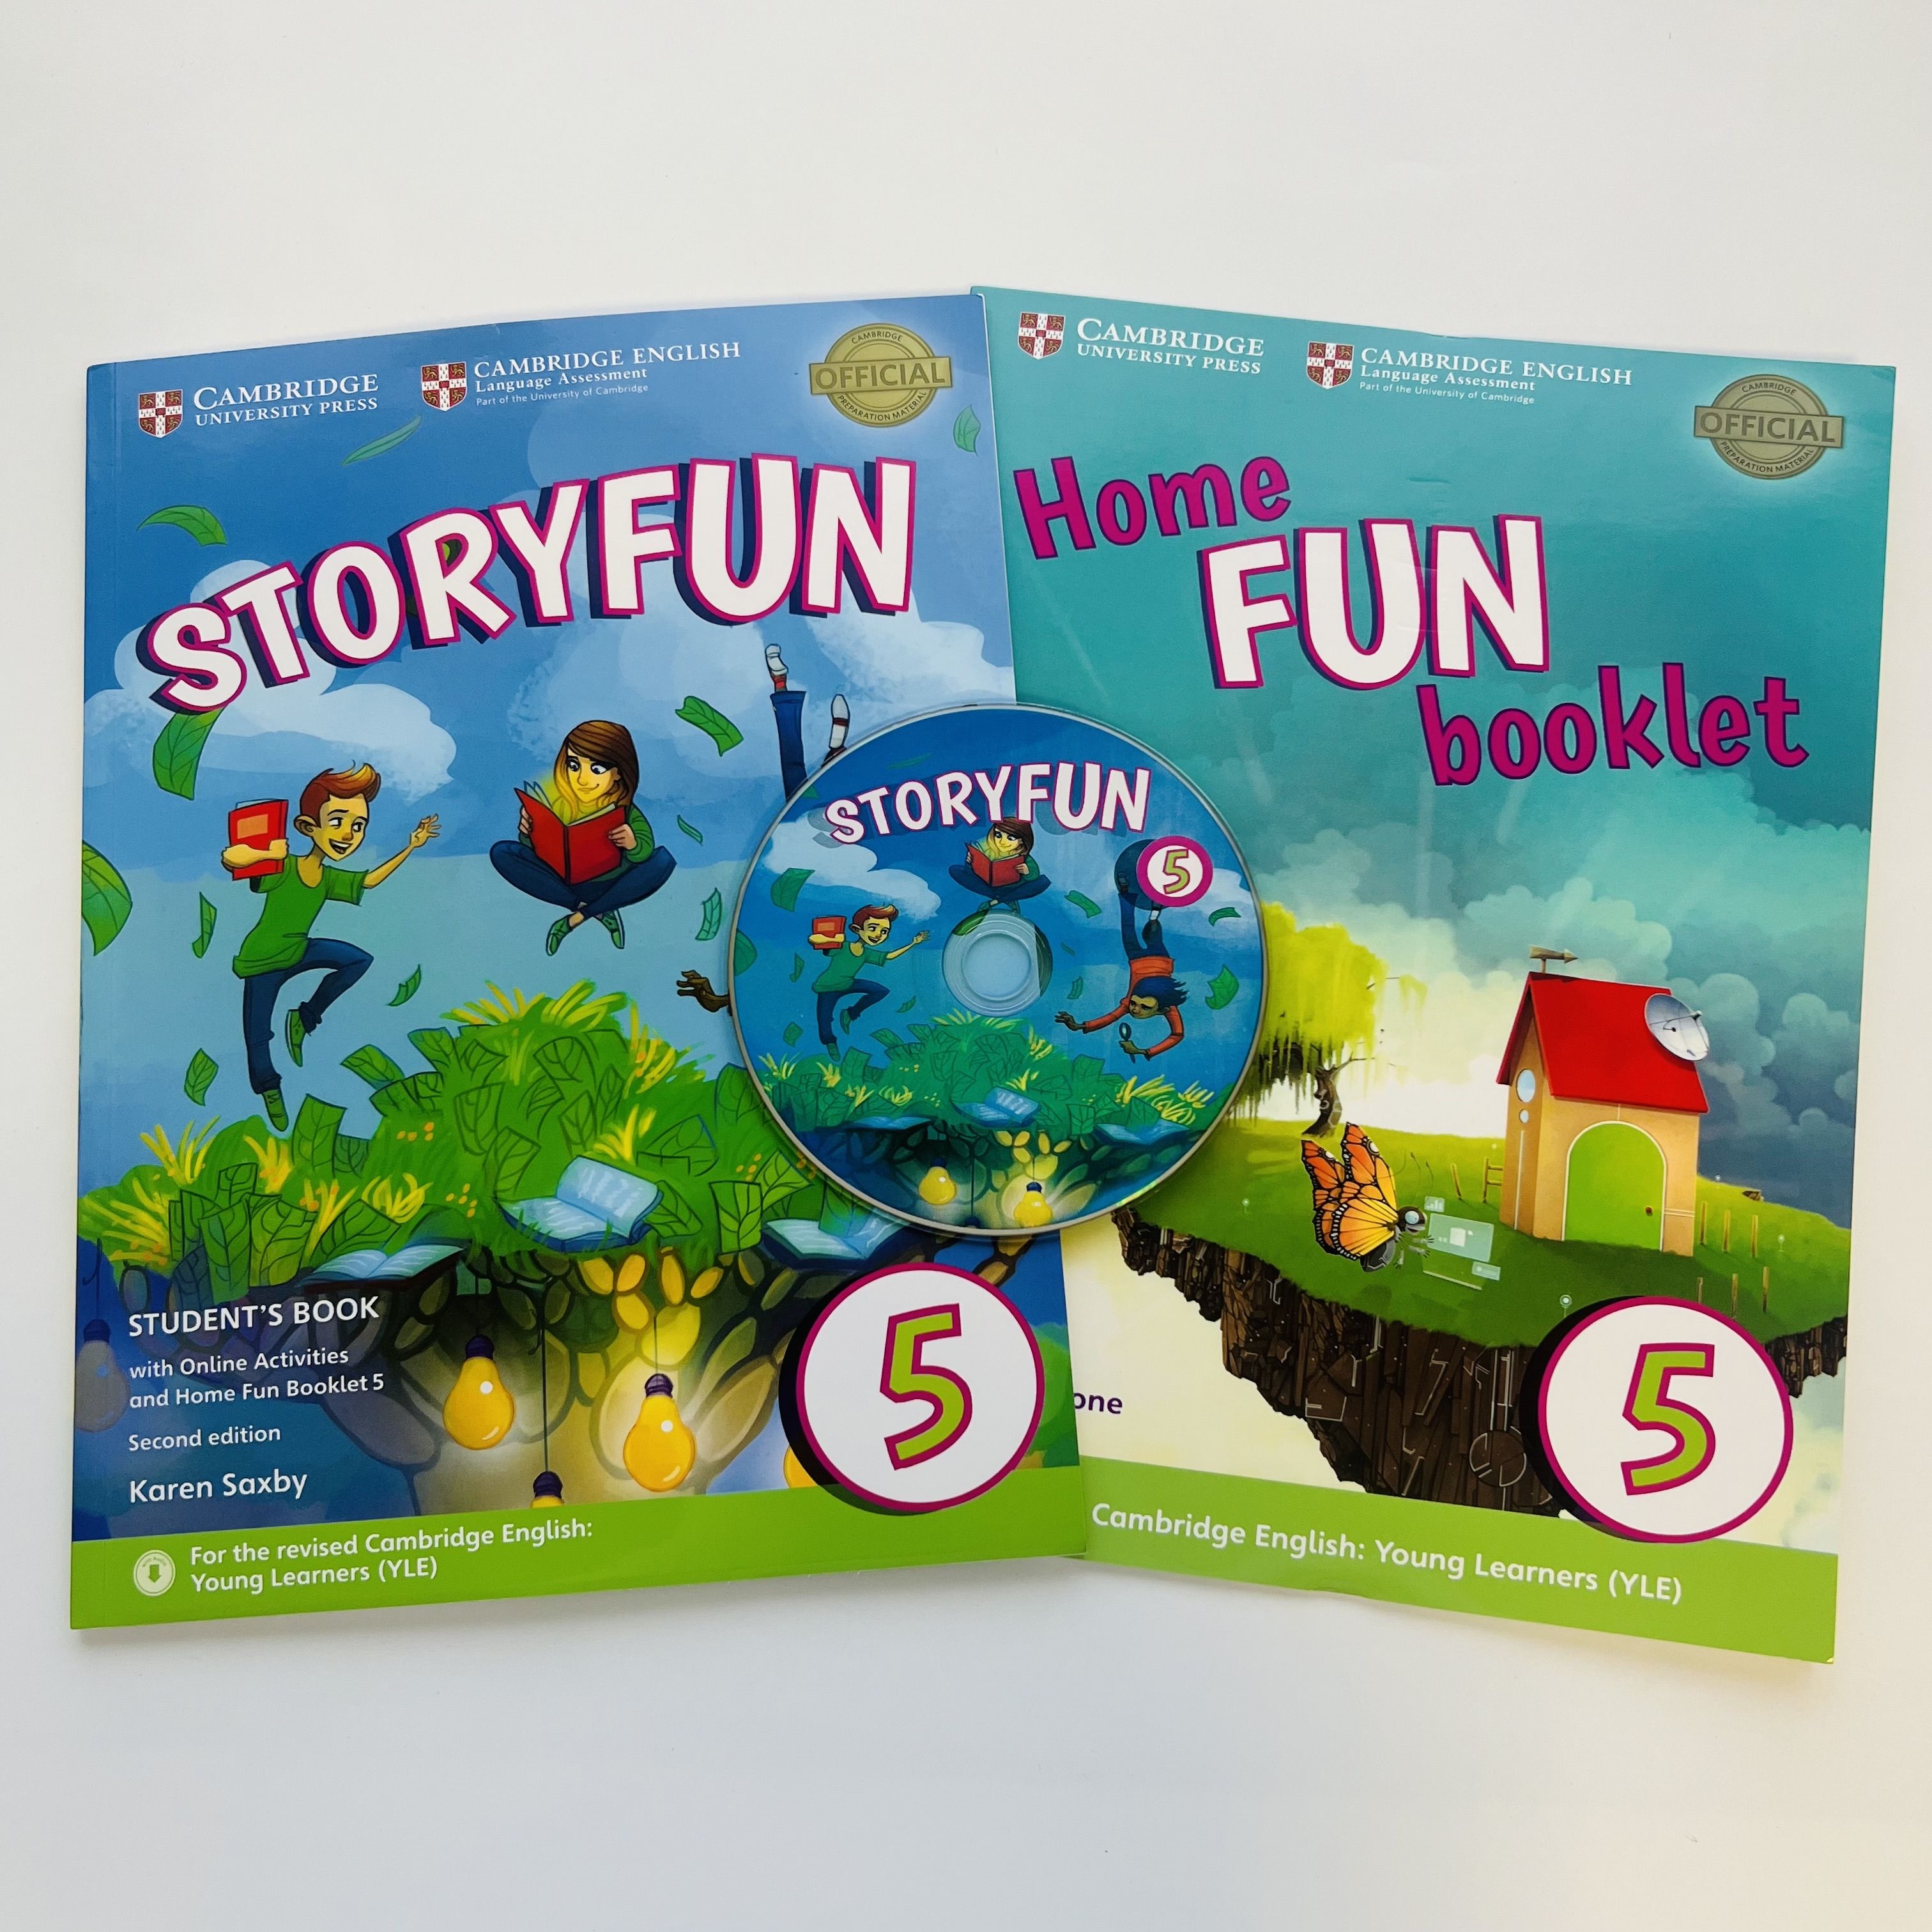 Home fun booklet. Storyfun 5. Home fun booklet 2 ответы. Брошюра учебное пособие. Come and Play storyfun.